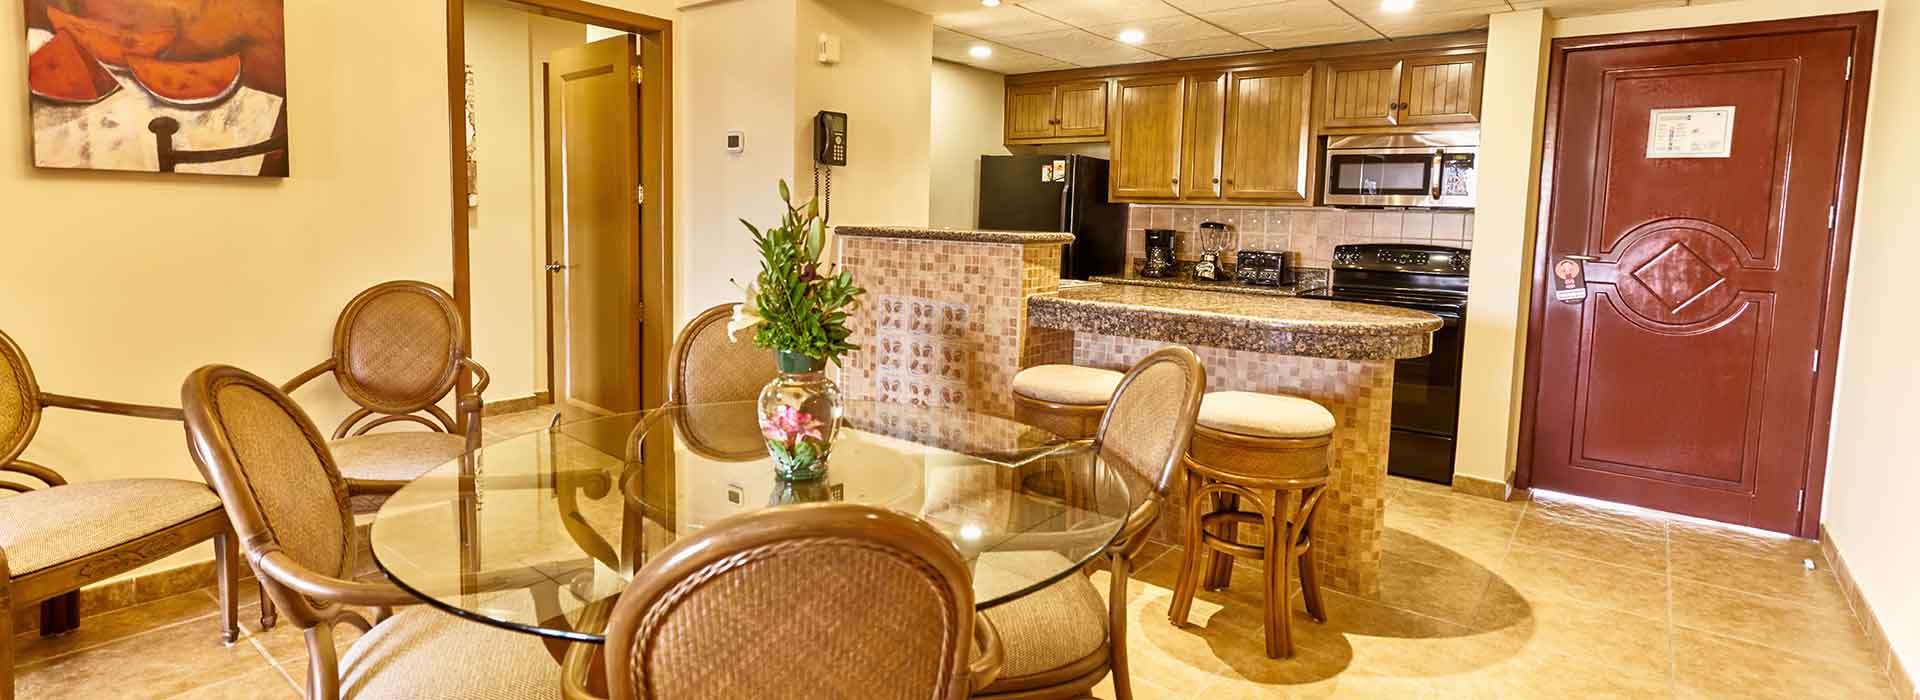 The Royal Haciendas suite with kitchen